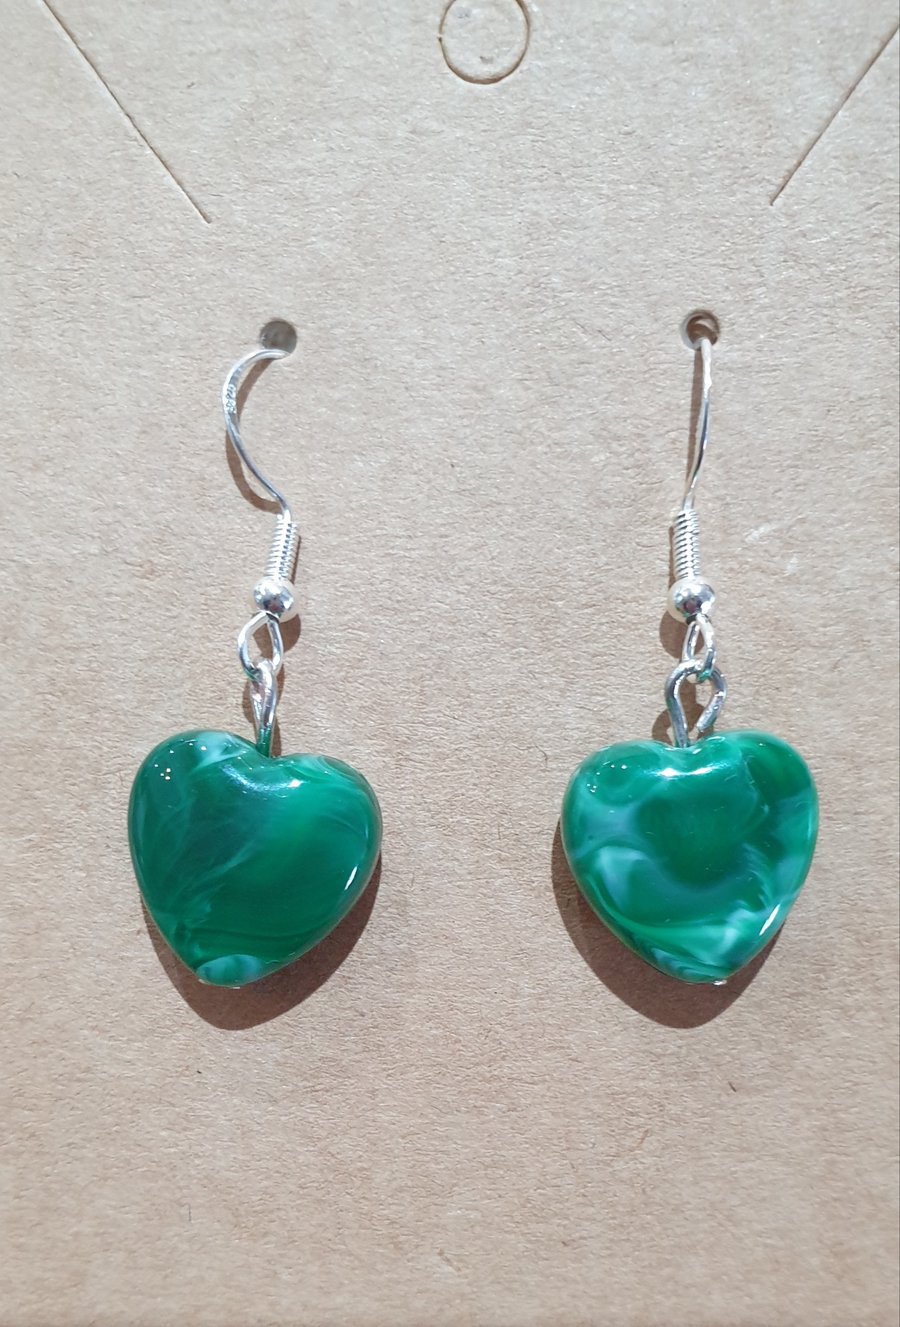 Acrylic Green Heart Dangle Earrings on 925 Silver-Plated Ear Wires